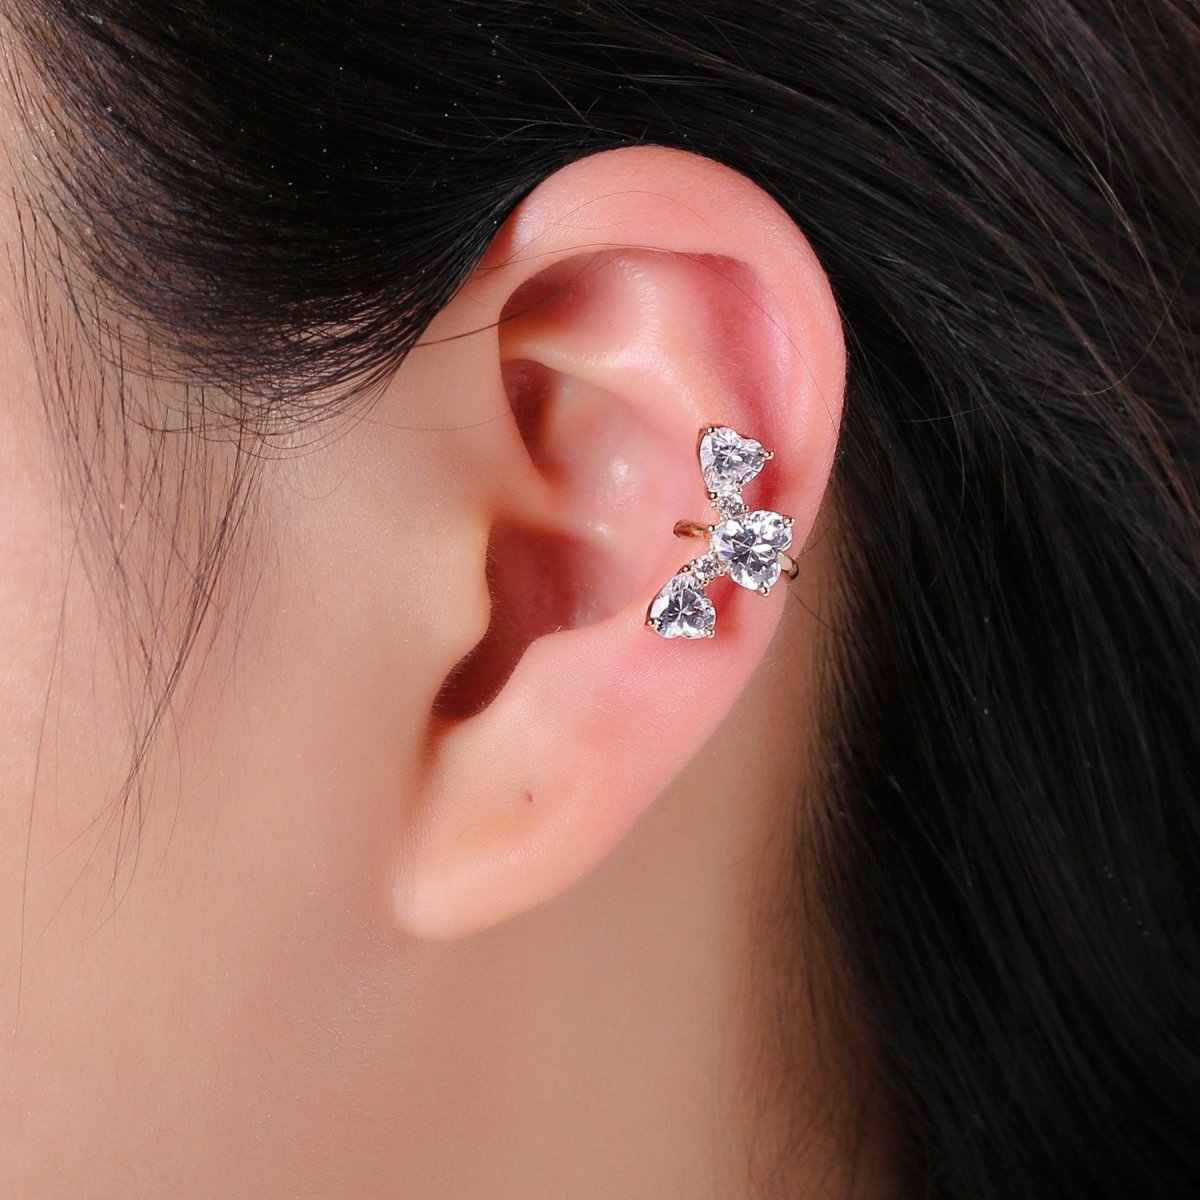 1x Heart Ear Cuff | Rose Gold Filled Ear Cuff No Piercing | Cubic Love Earring No Pierced Dainty Cz Ear Cuff | Fake Helix Piercing AI-142 - DLUXCA